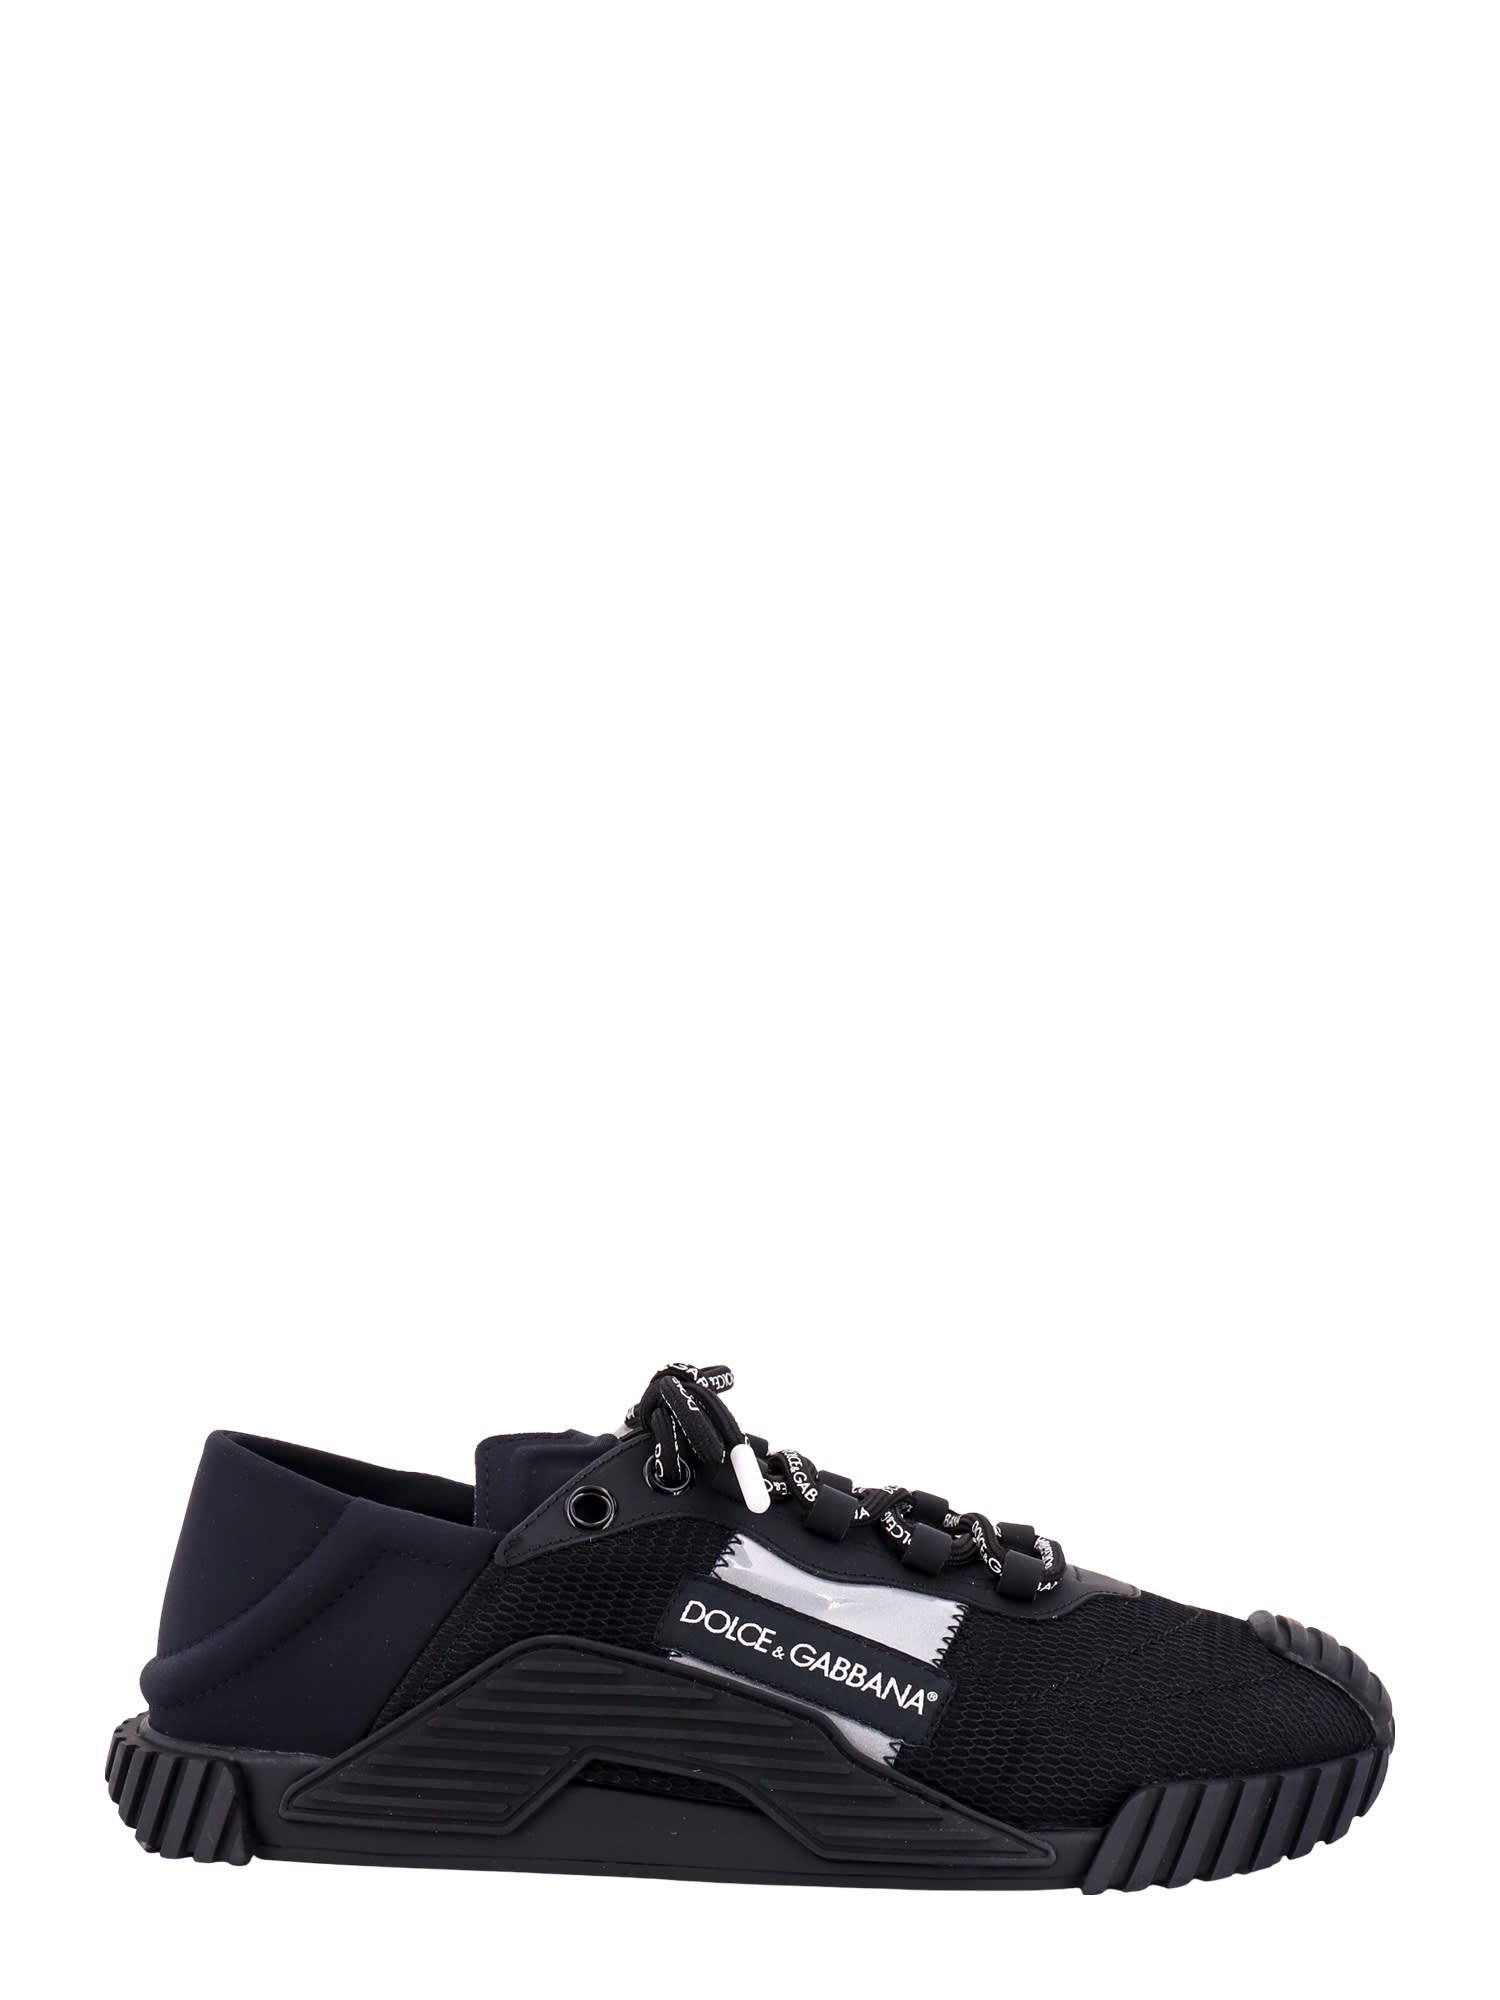 Dolce & Gabbana Ns1 Sneakers In Nero